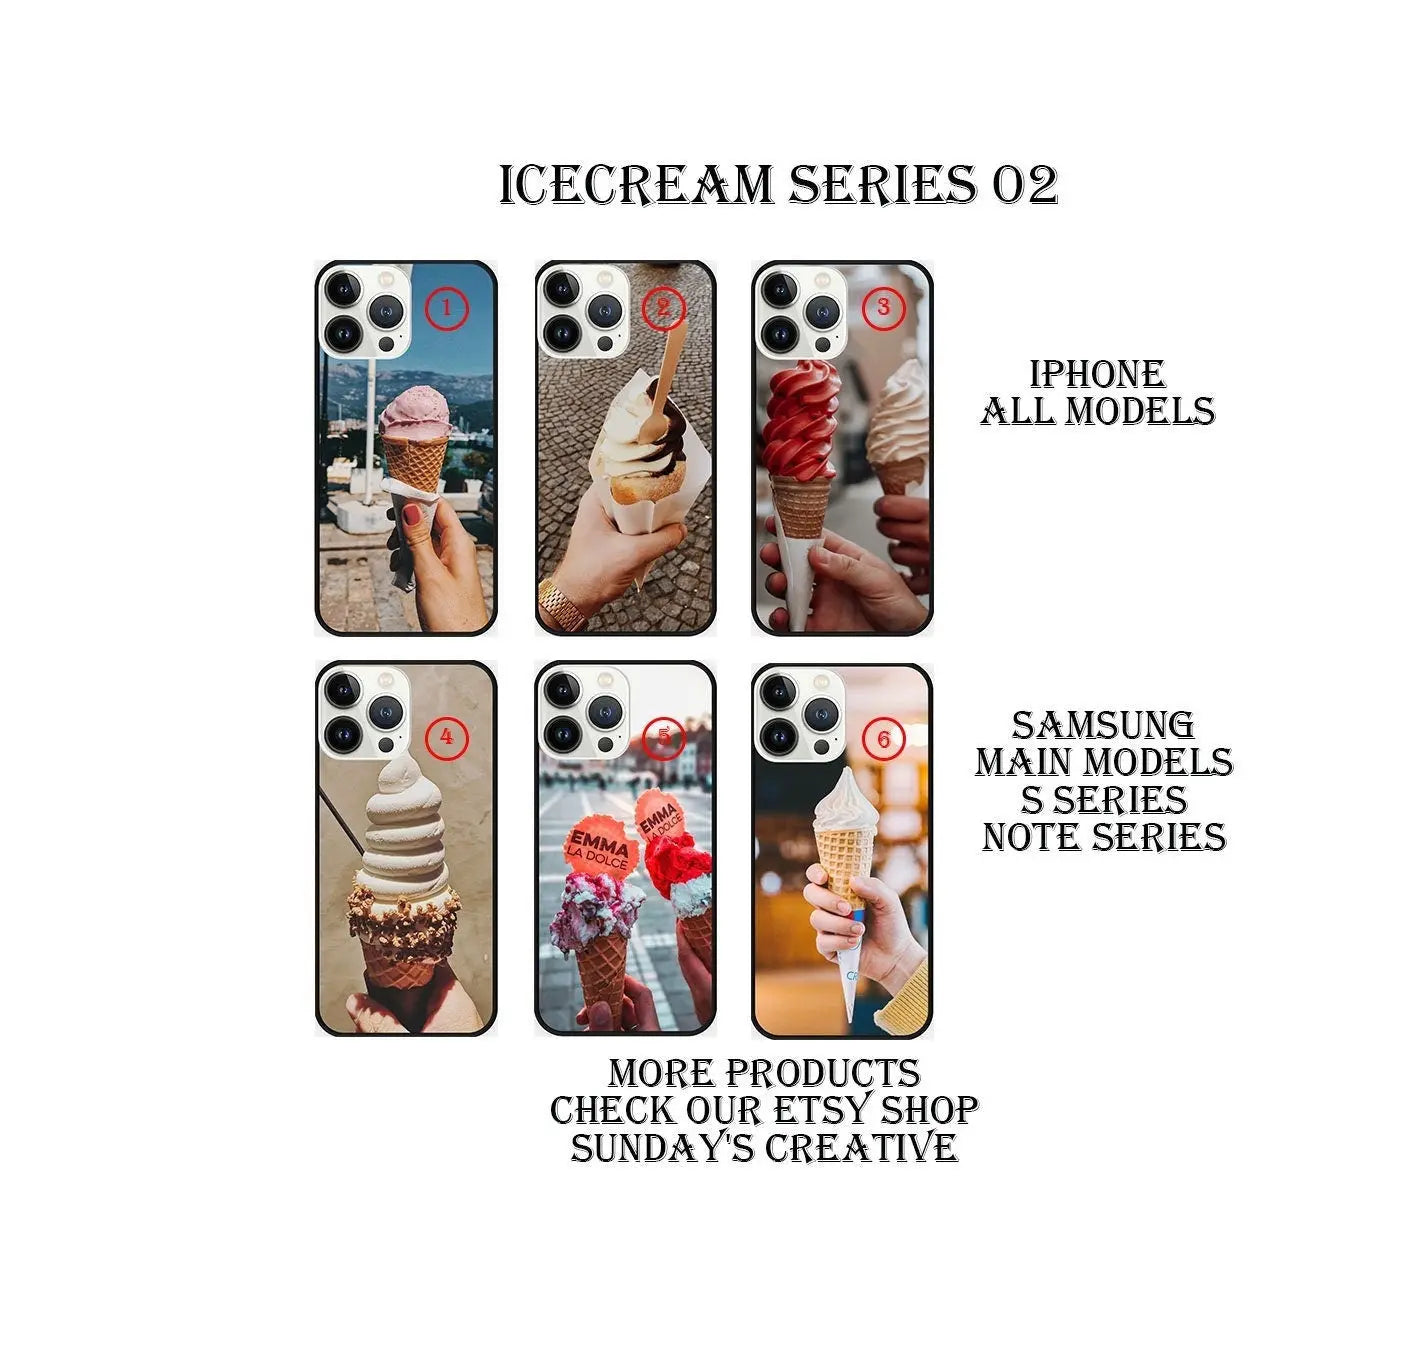 Designed phone cases Ice cream series 02 Sunday's Creative